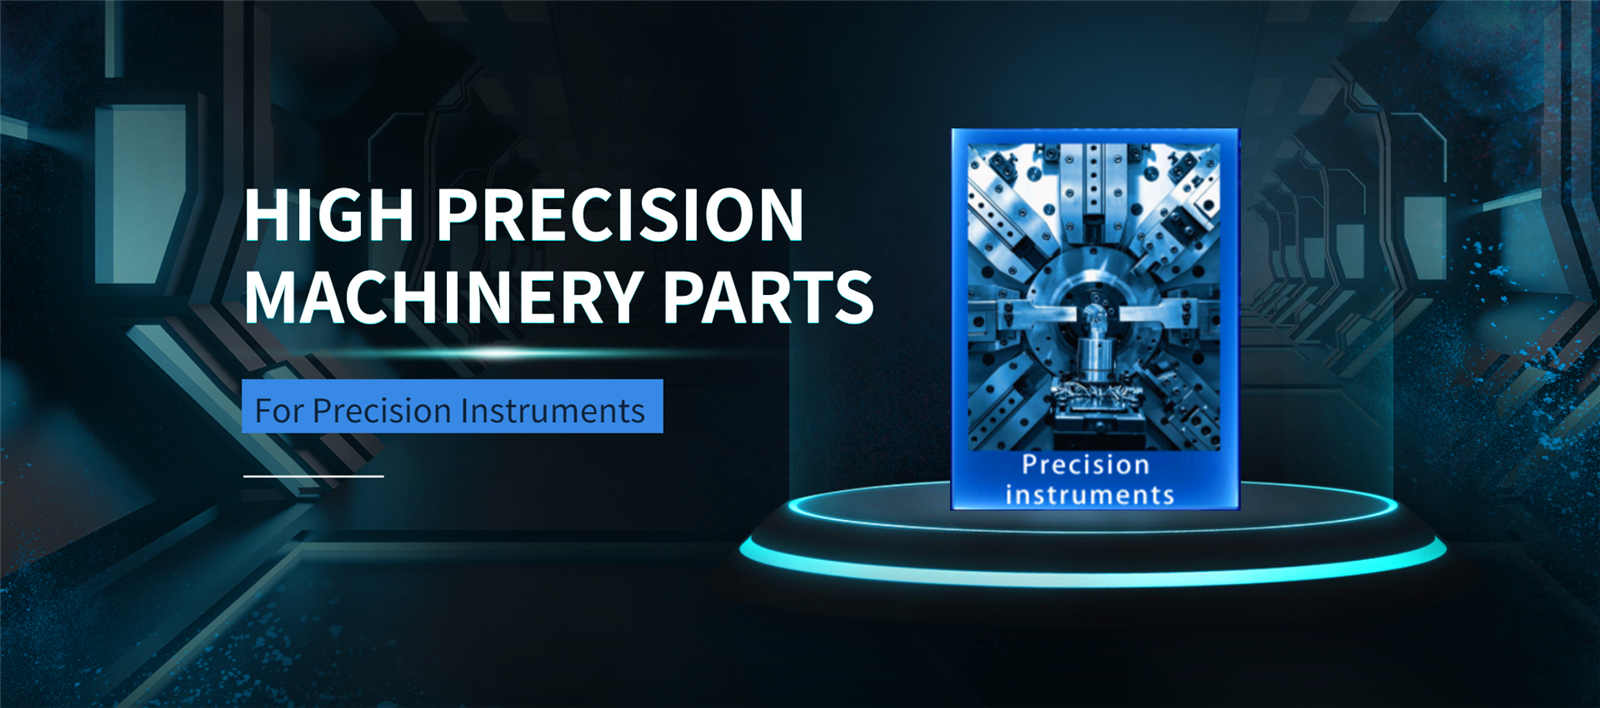 Precision instruments